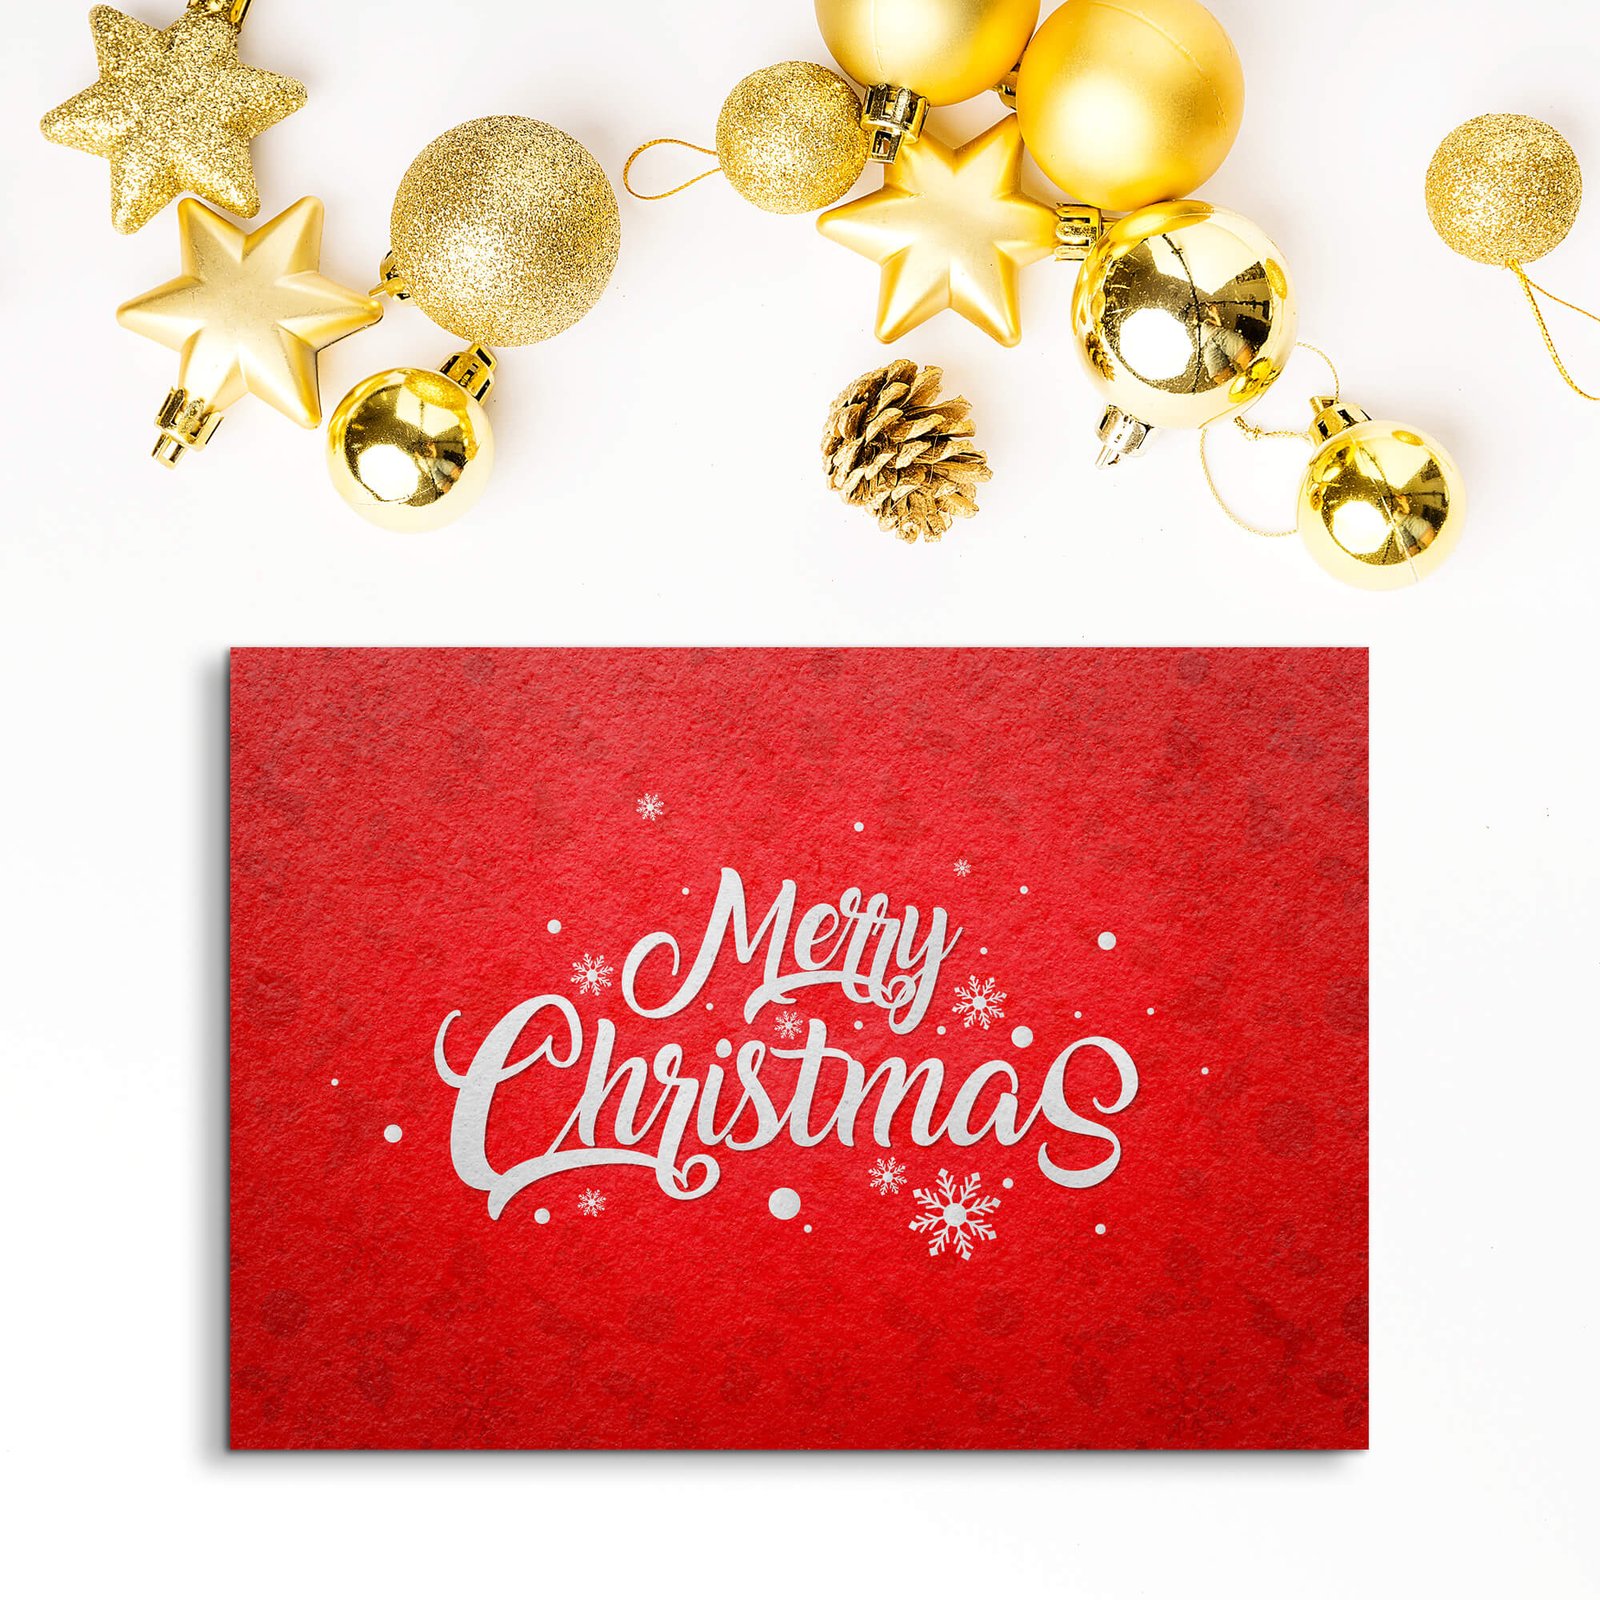 Free a5 Christmas Card Mockup PSD Template